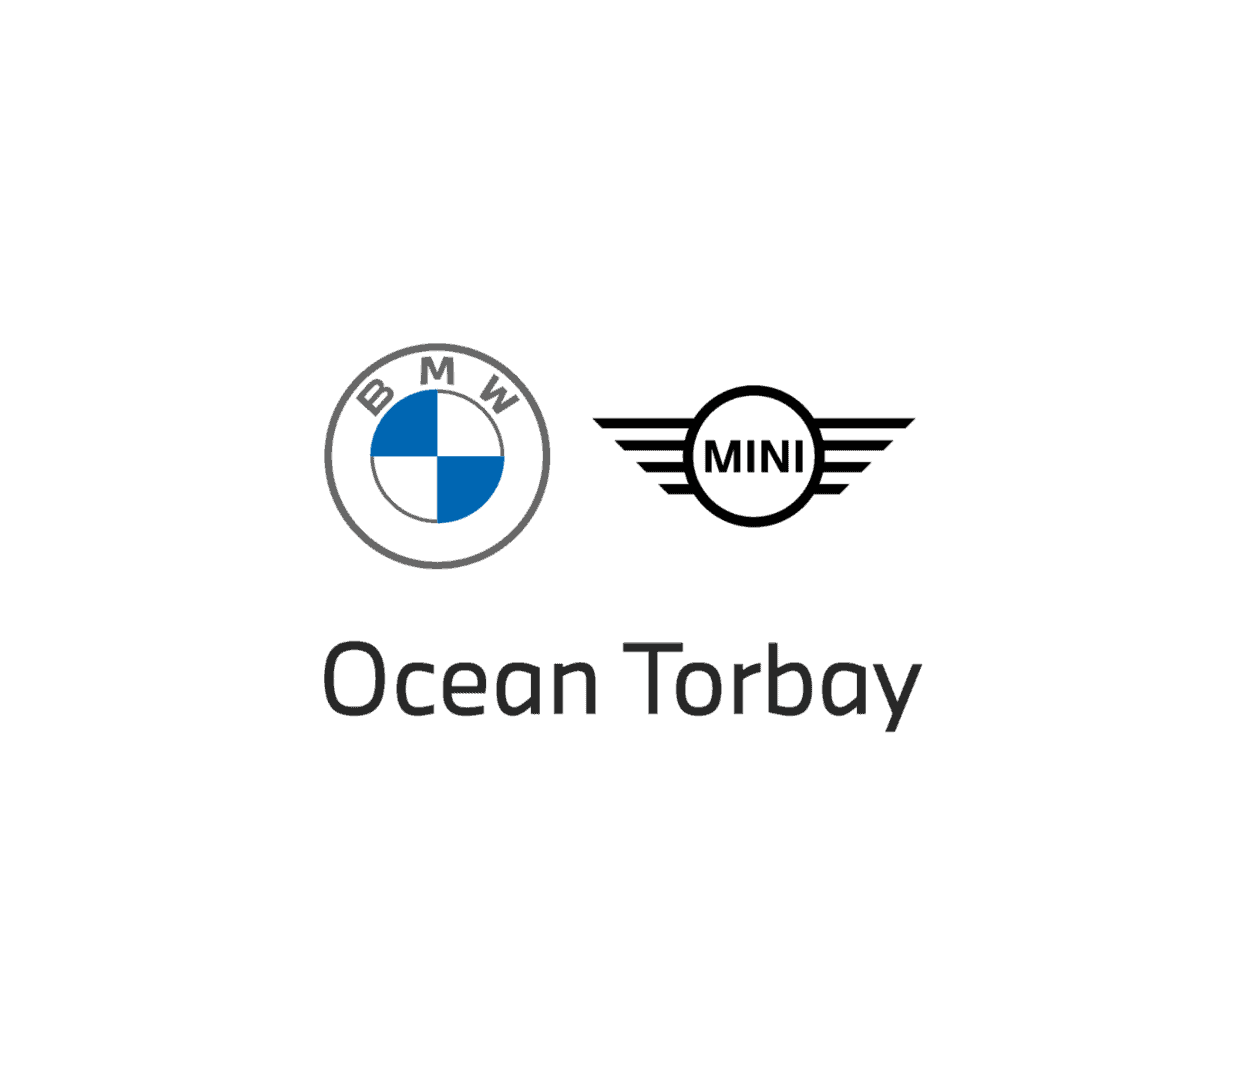 Ocean Torbay